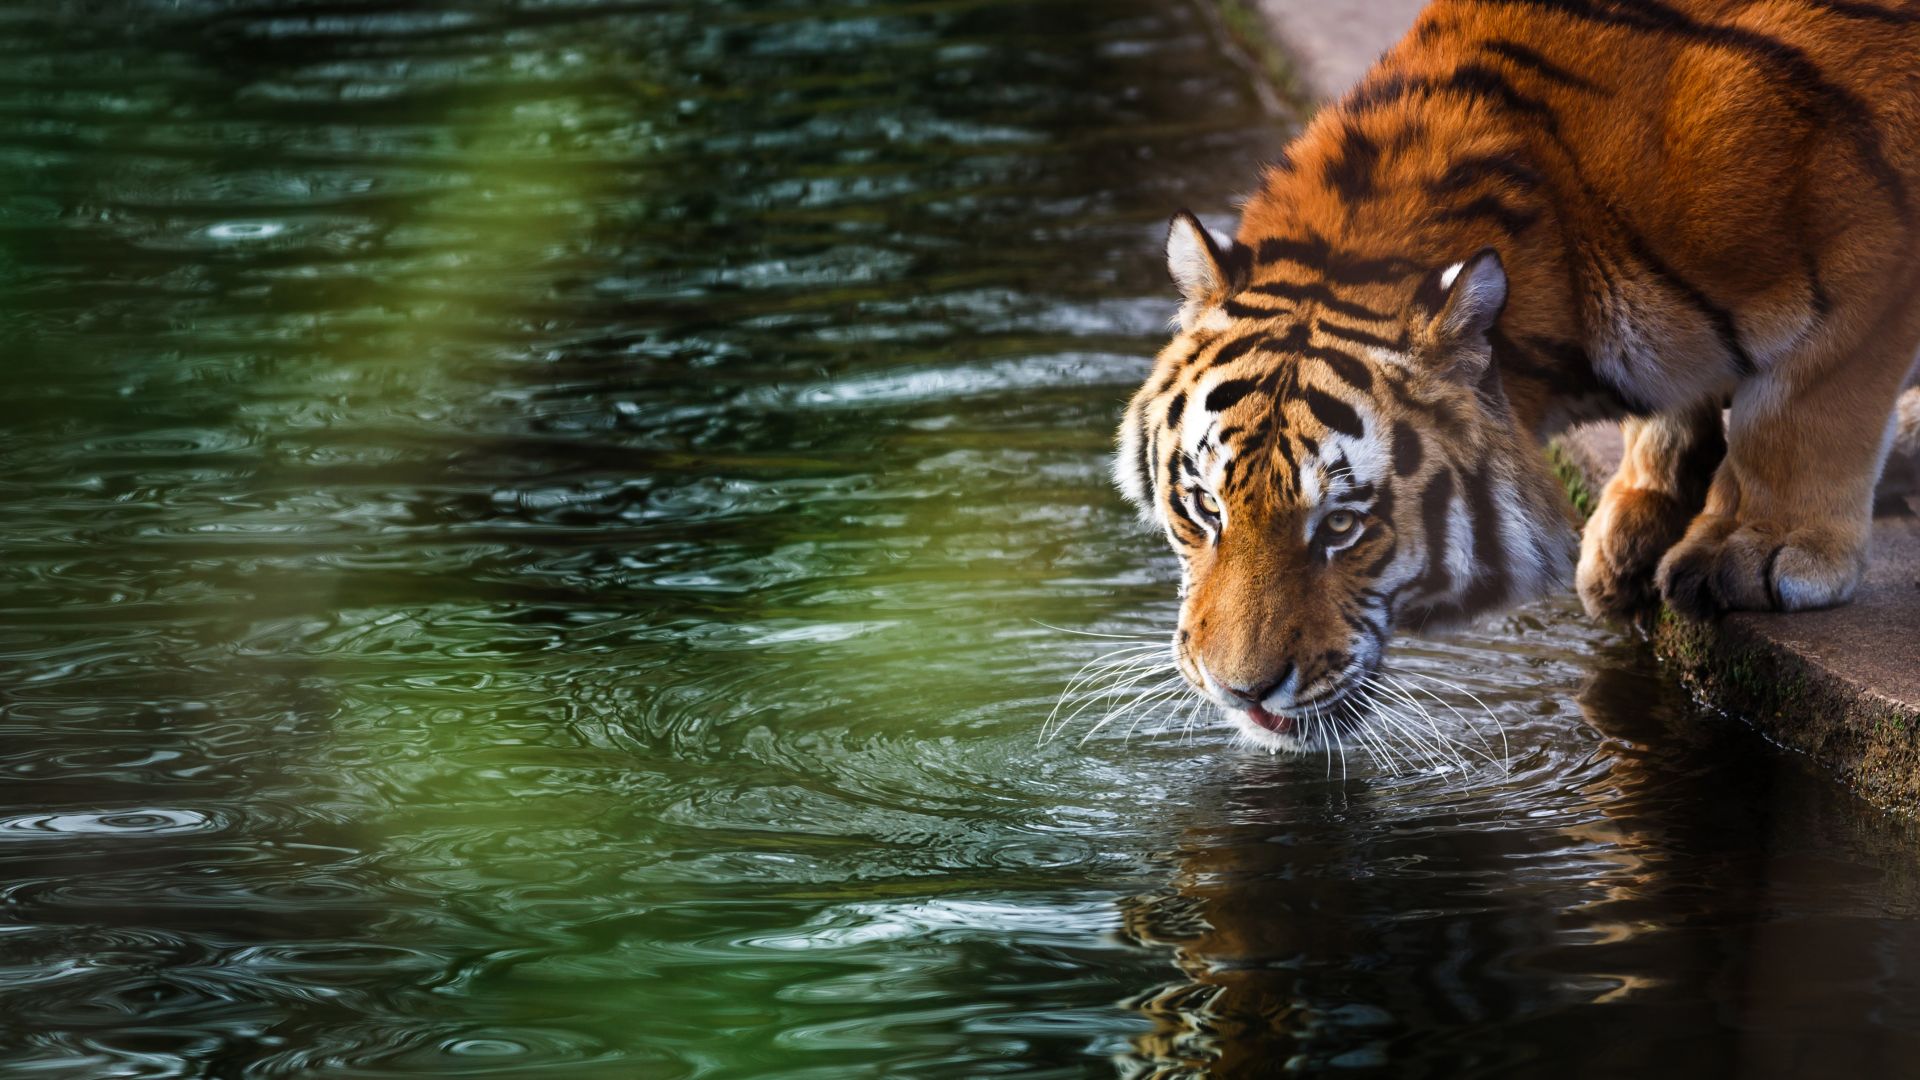 Wallpaper Tiger drinking water